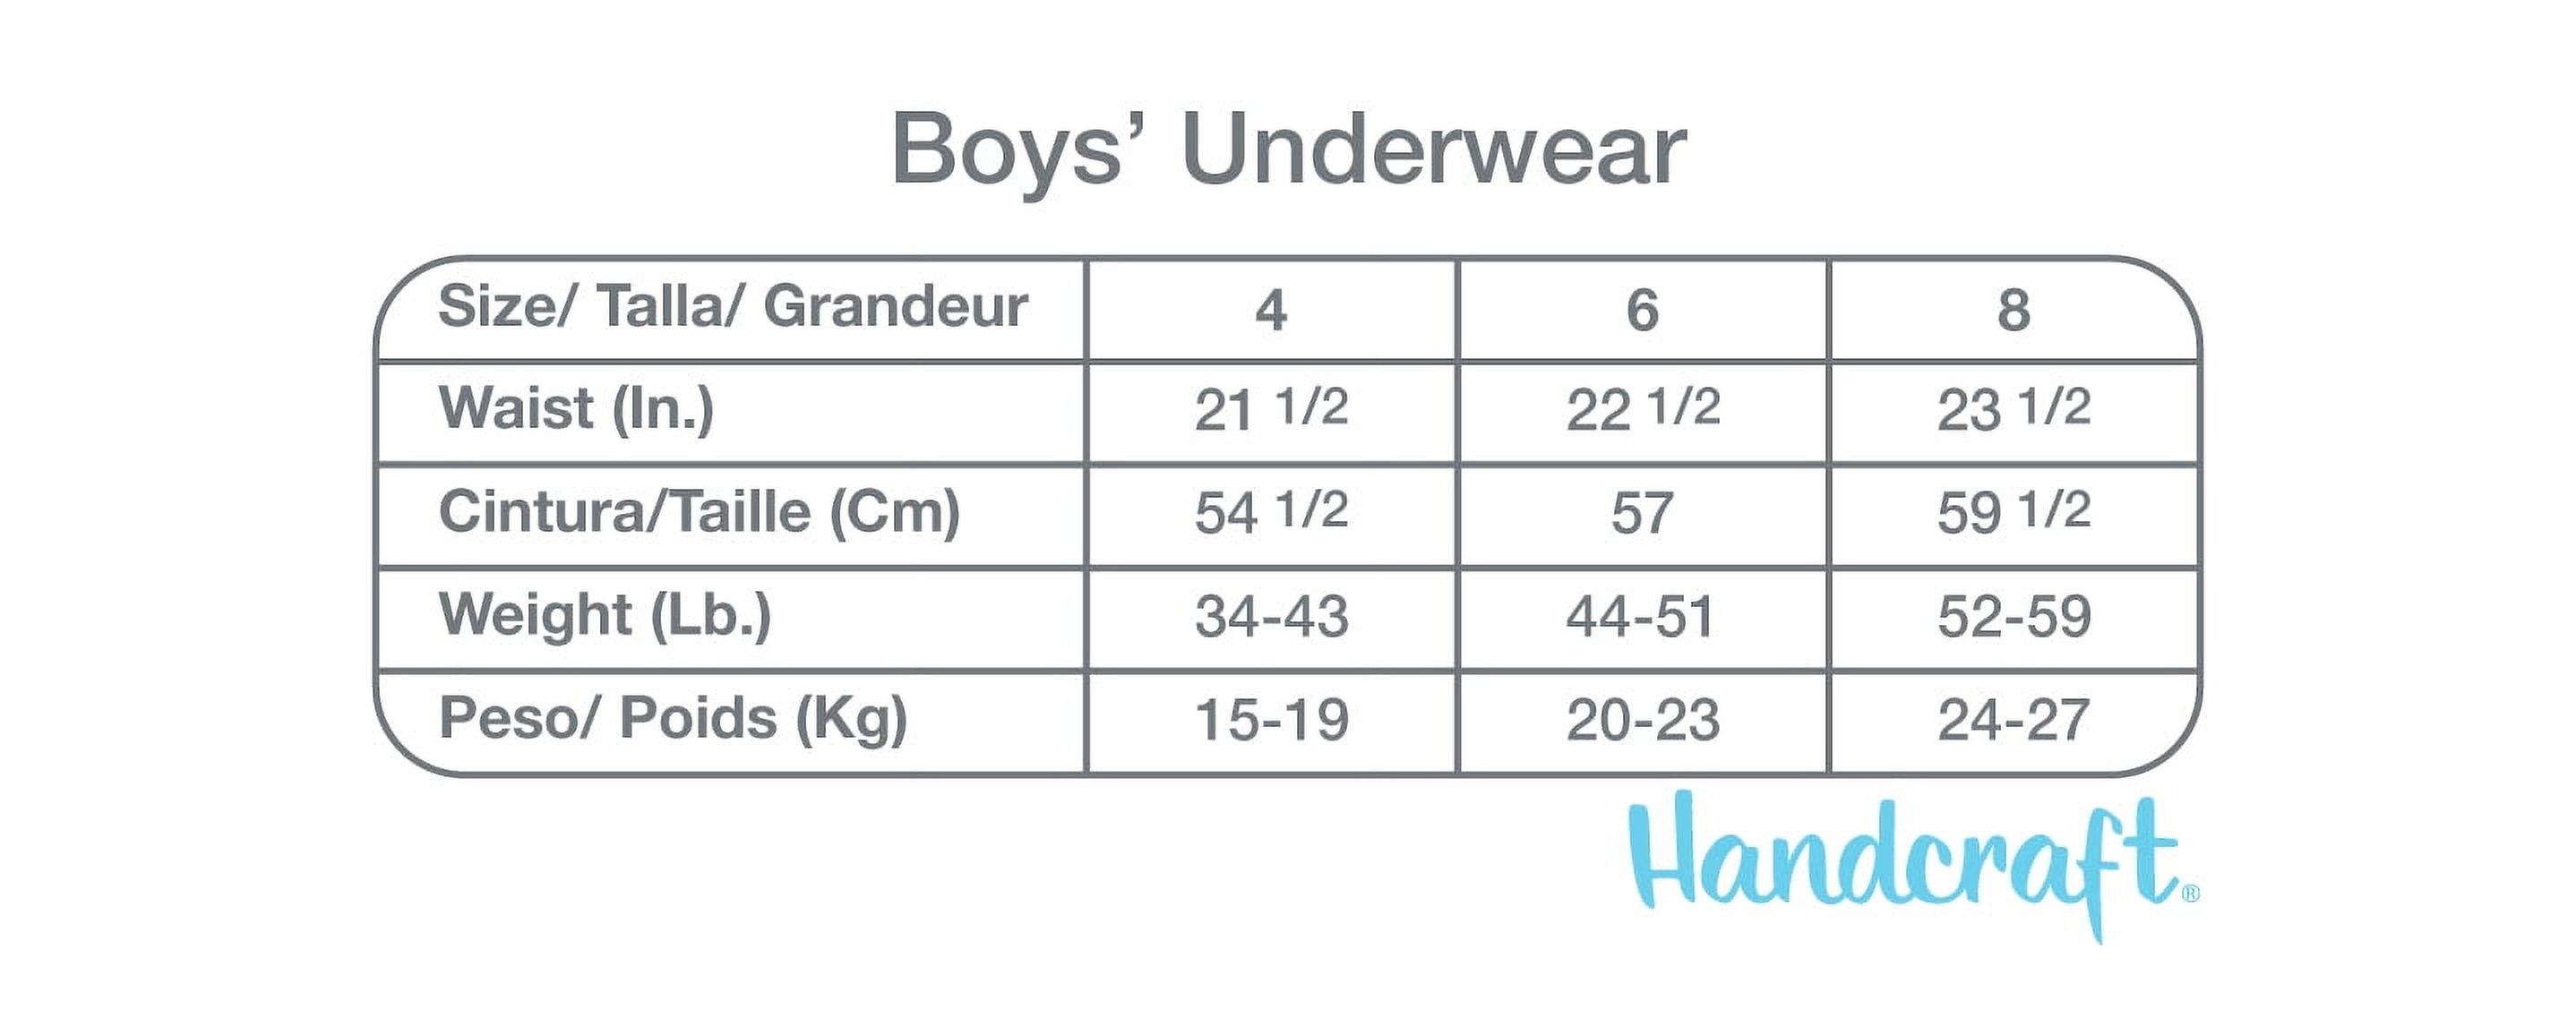 Pokemon Boys Underwear, 5 Pack Boxer Briefs Sizes 4-8 - image 2 of 3